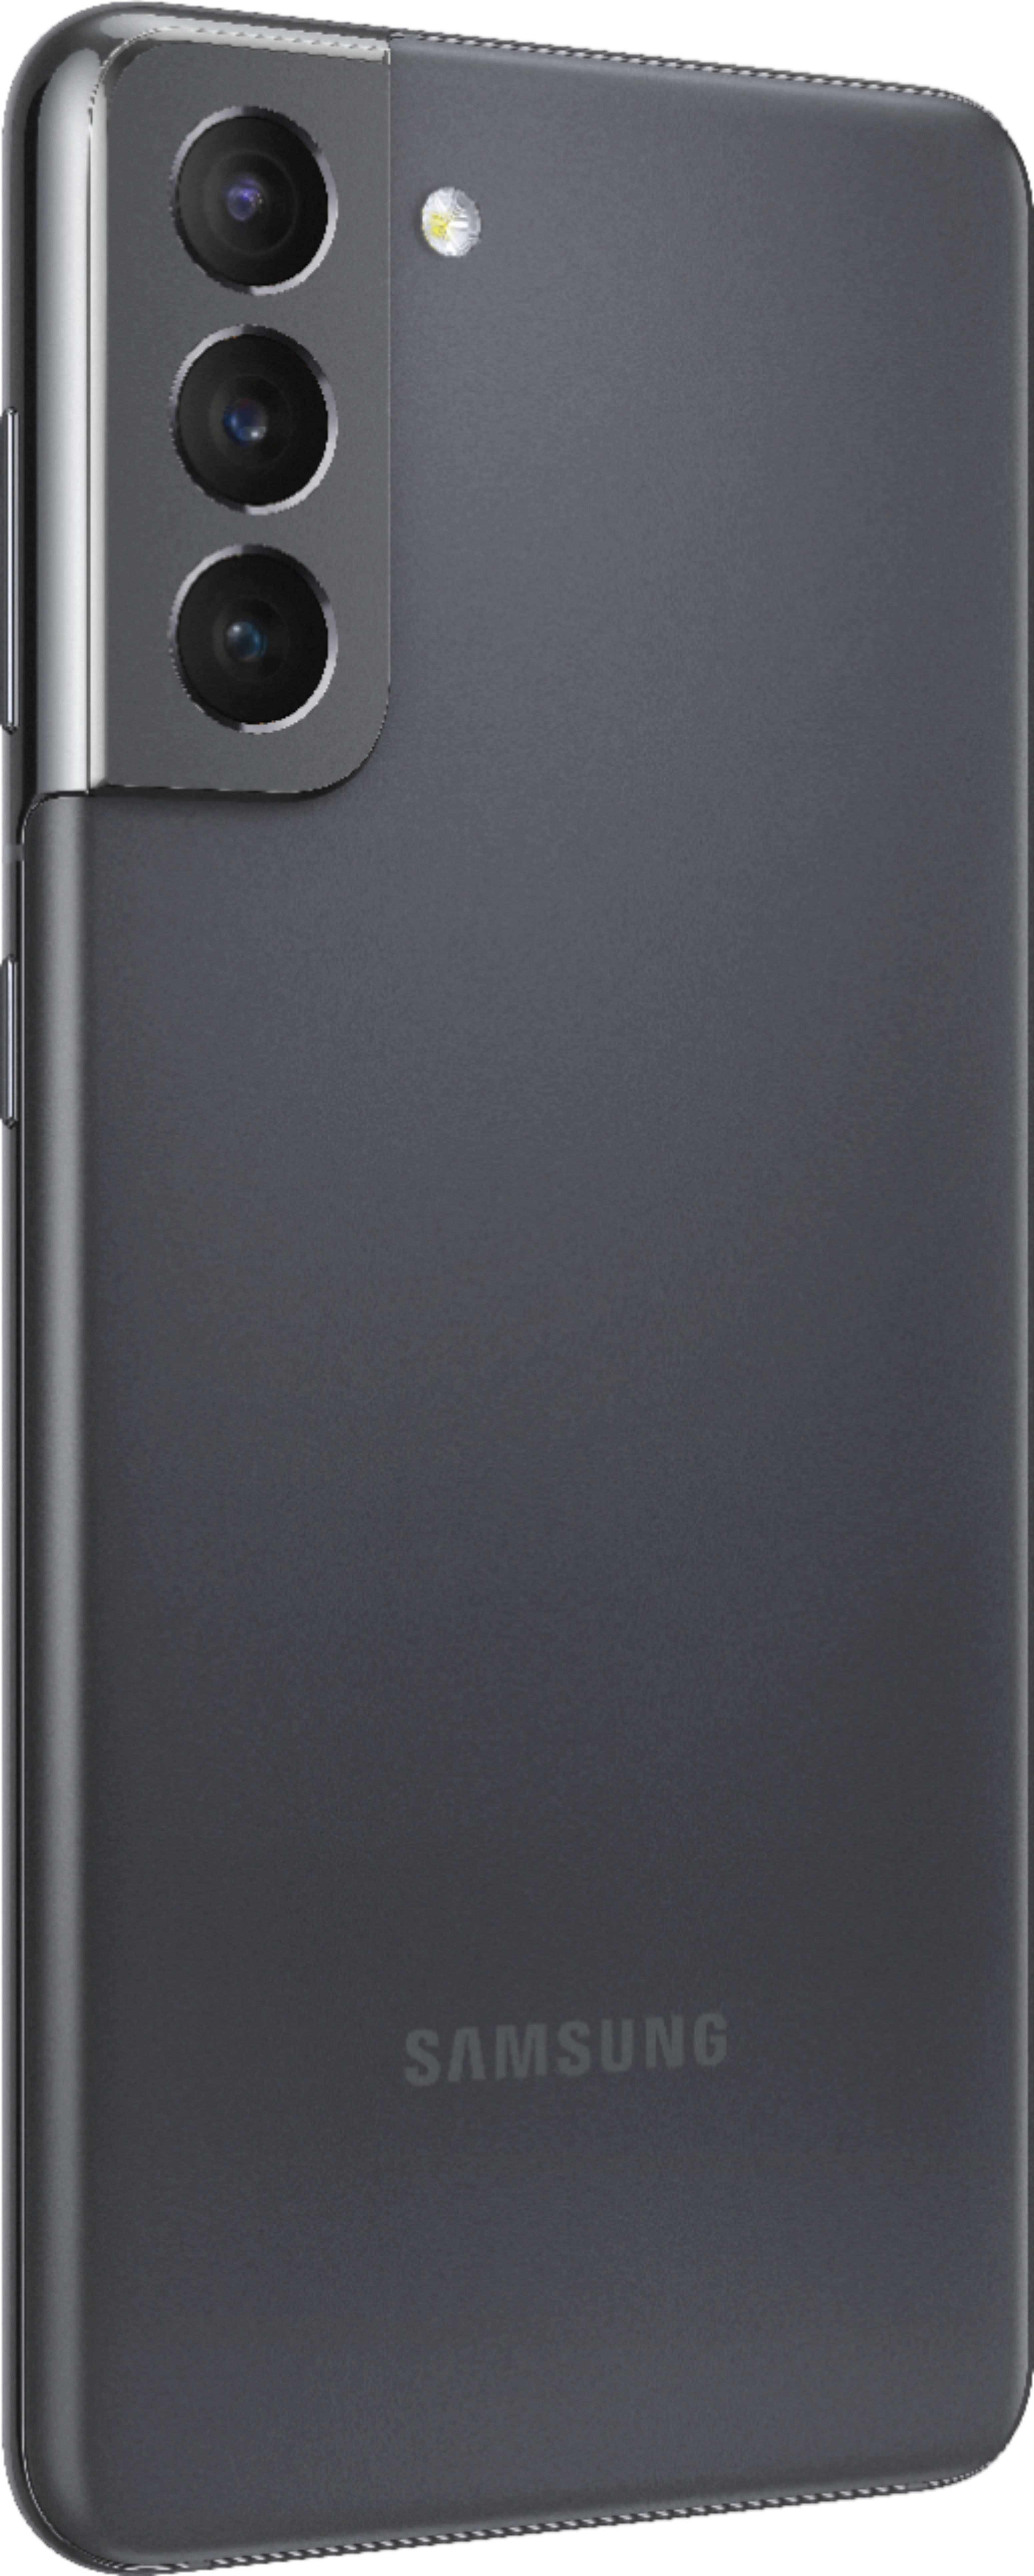  Samsung Galaxy S21 5G, US Version, 128GB, Phantom Gray